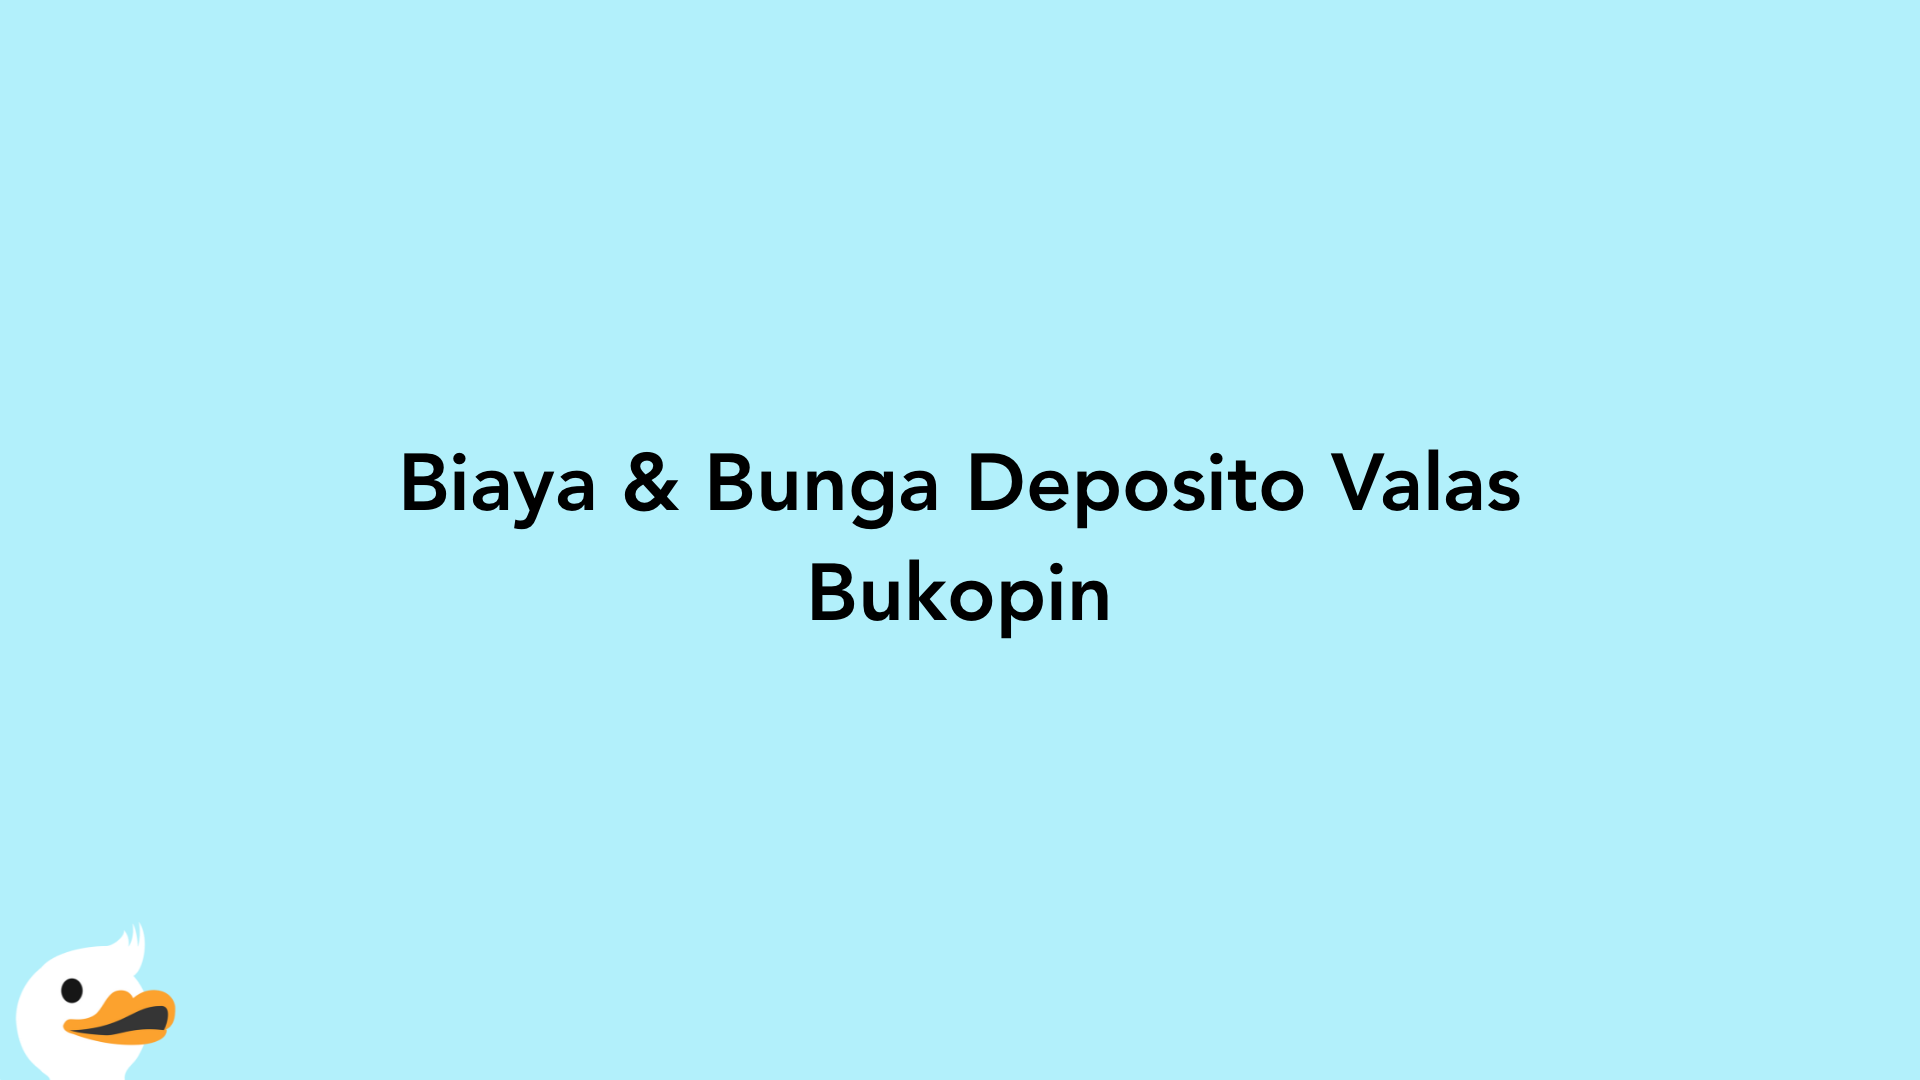 Biaya & Bunga Deposito Valas Bukopin